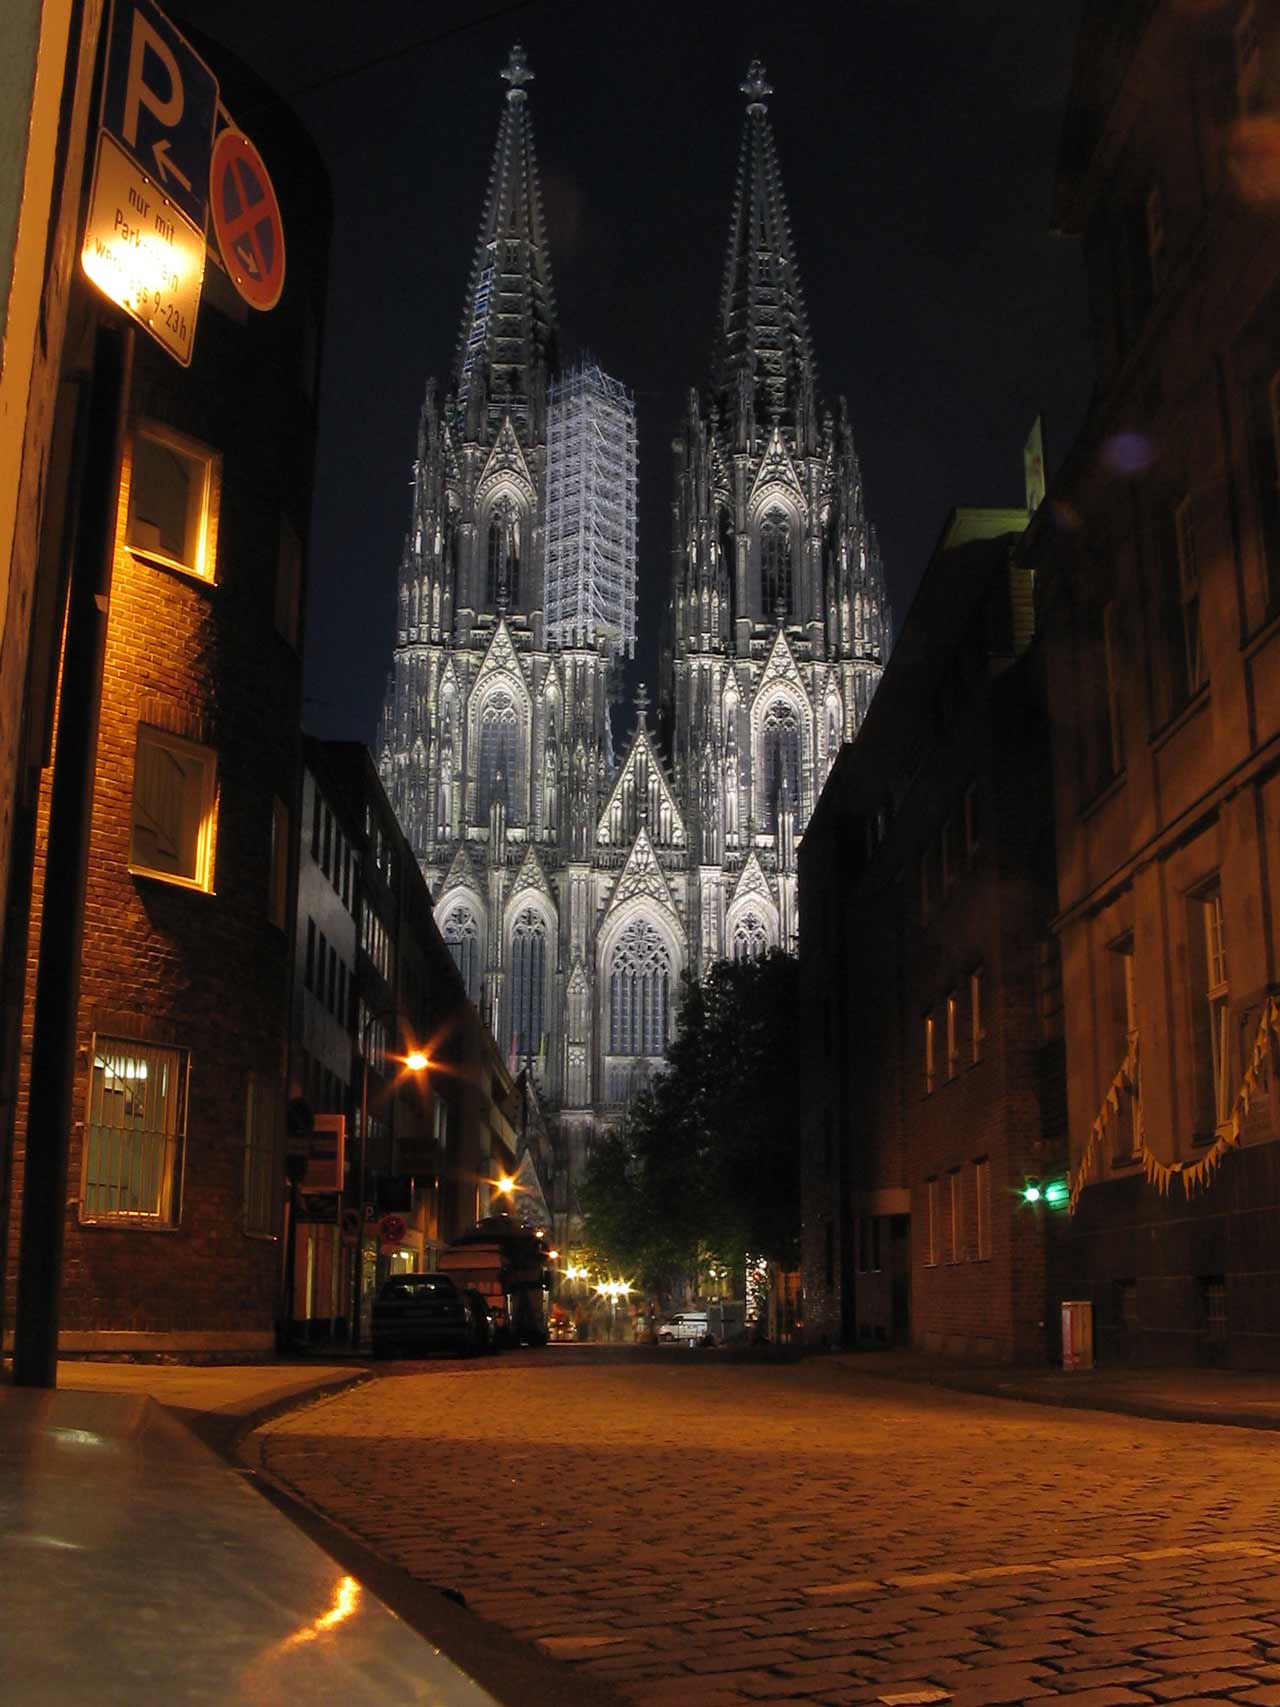 Gruseltouren durch Köln nachts